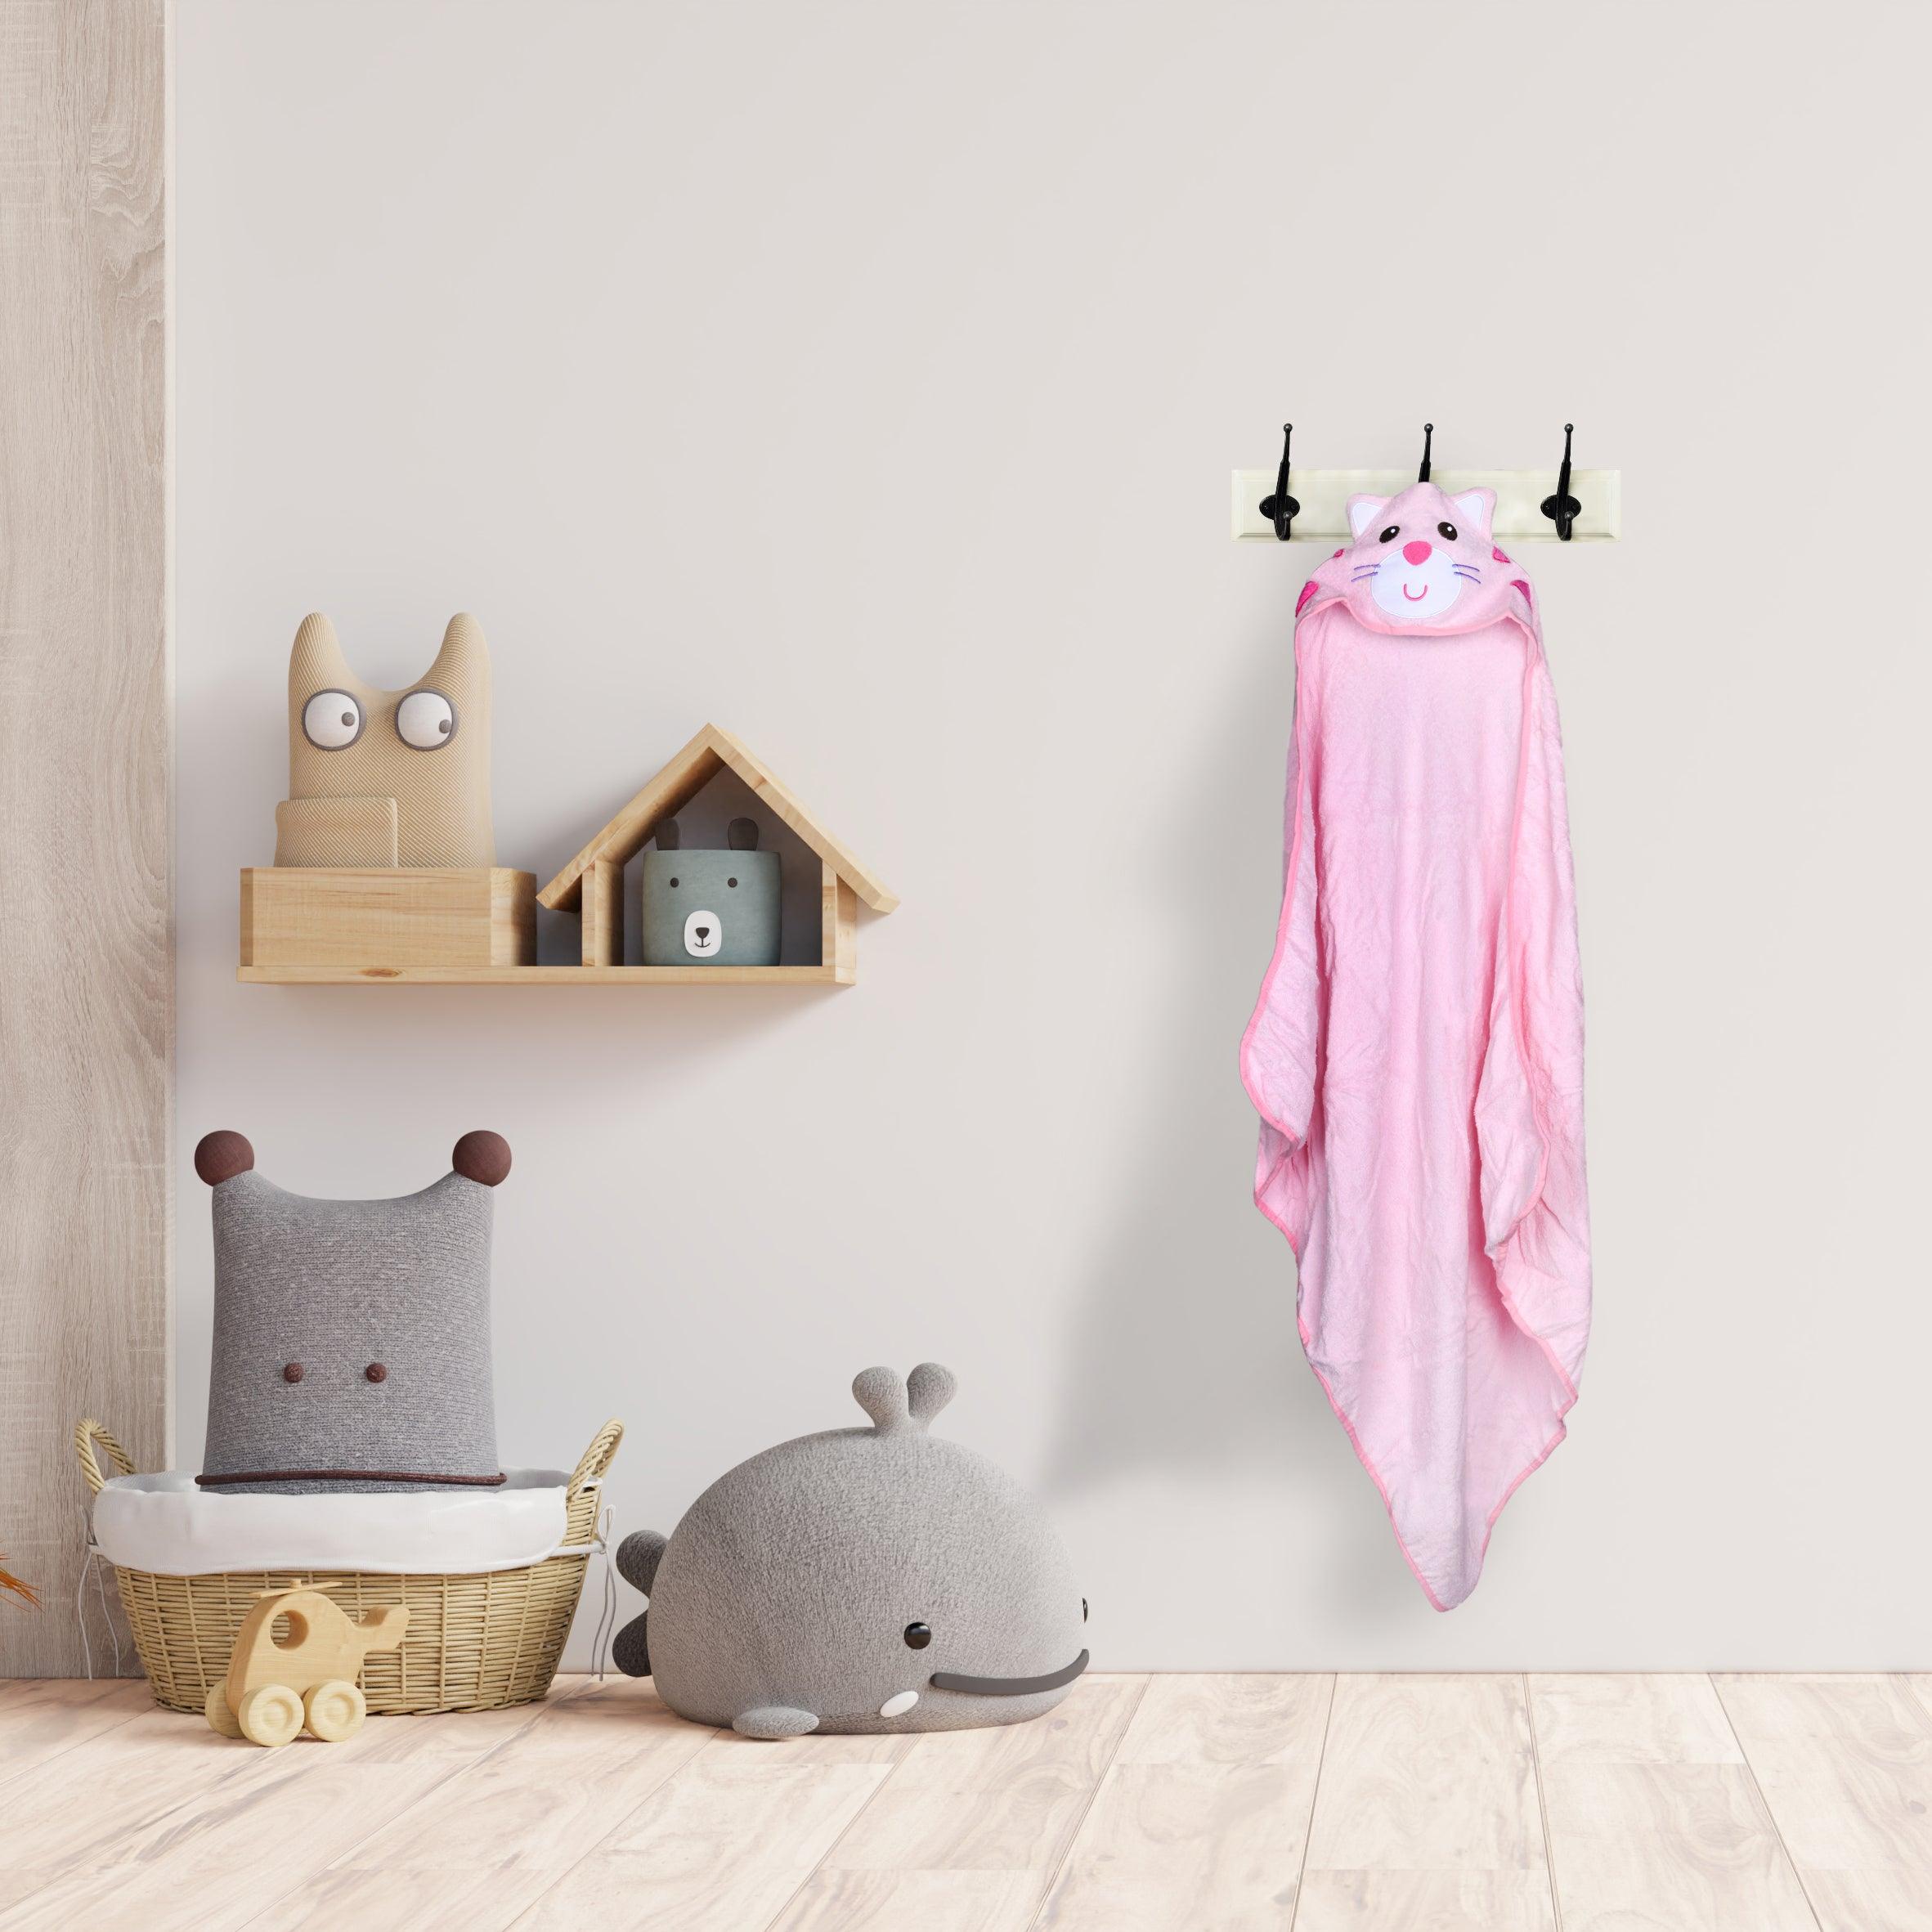 Kitty Pink Animal Hooded Towel - Baby Moo